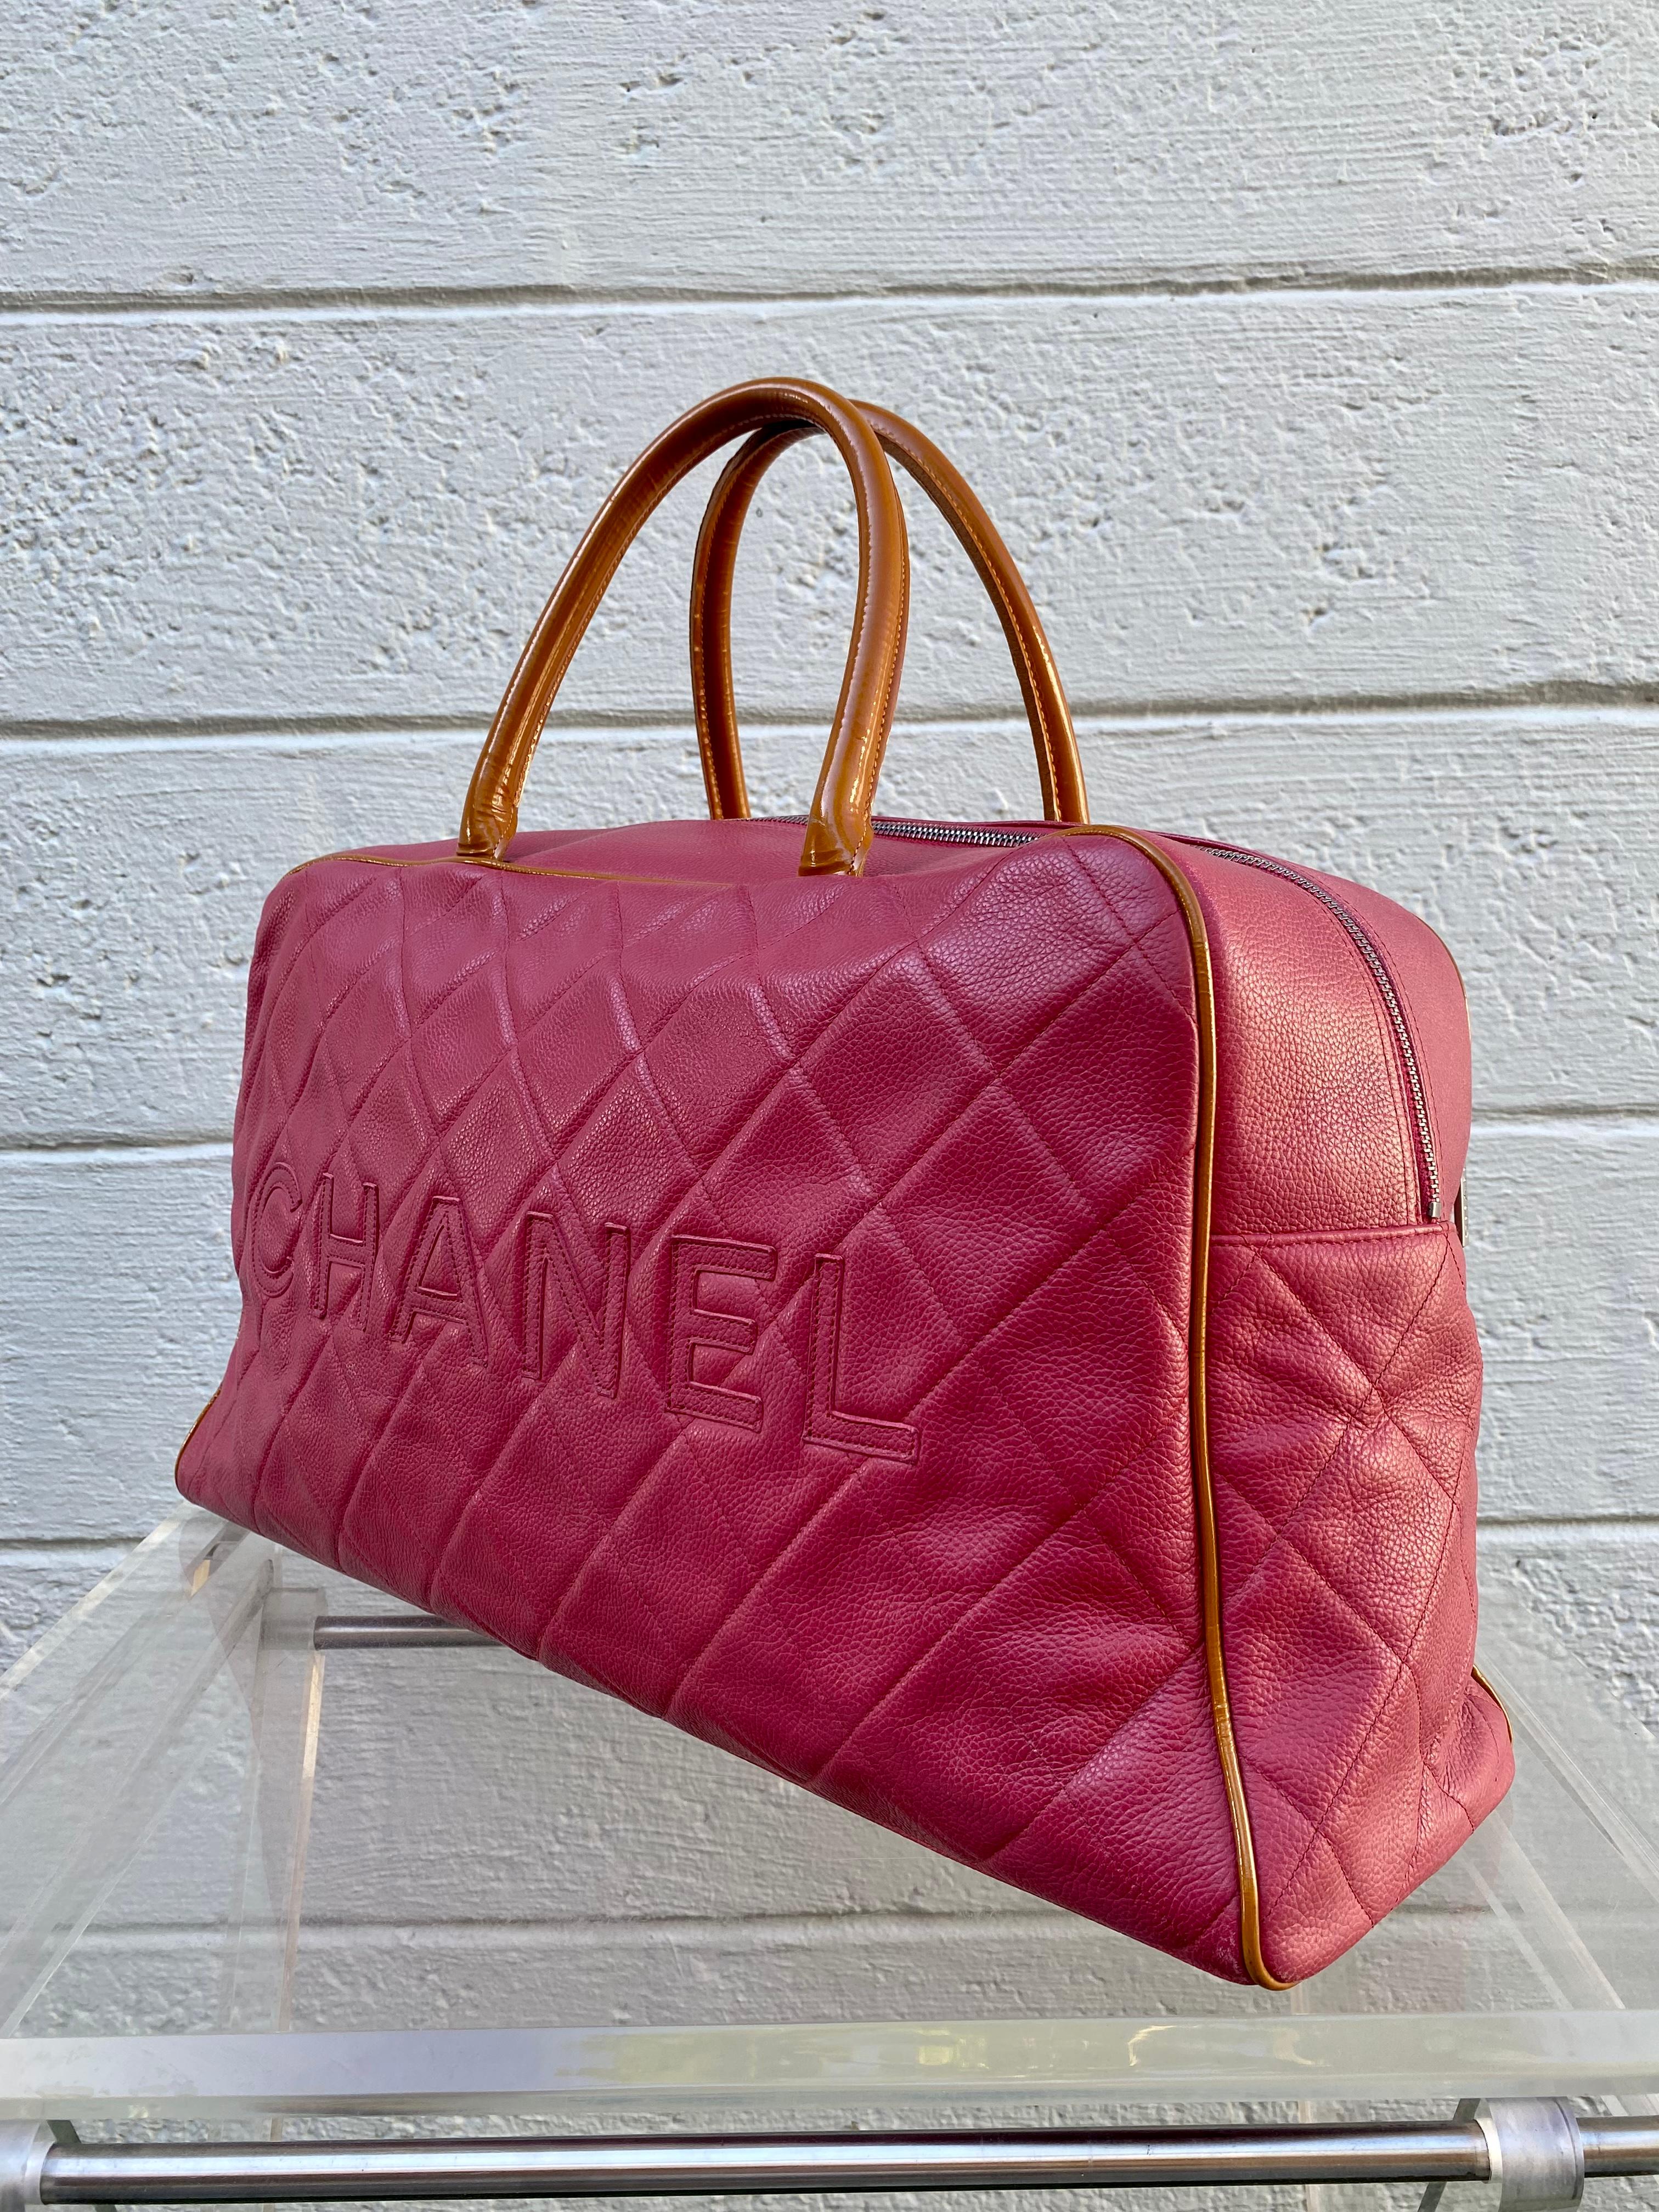 Chanel Rare Vintage Raspberry Pink Caviar Weekender Travel Duffle Shopper Bag For Sale 1